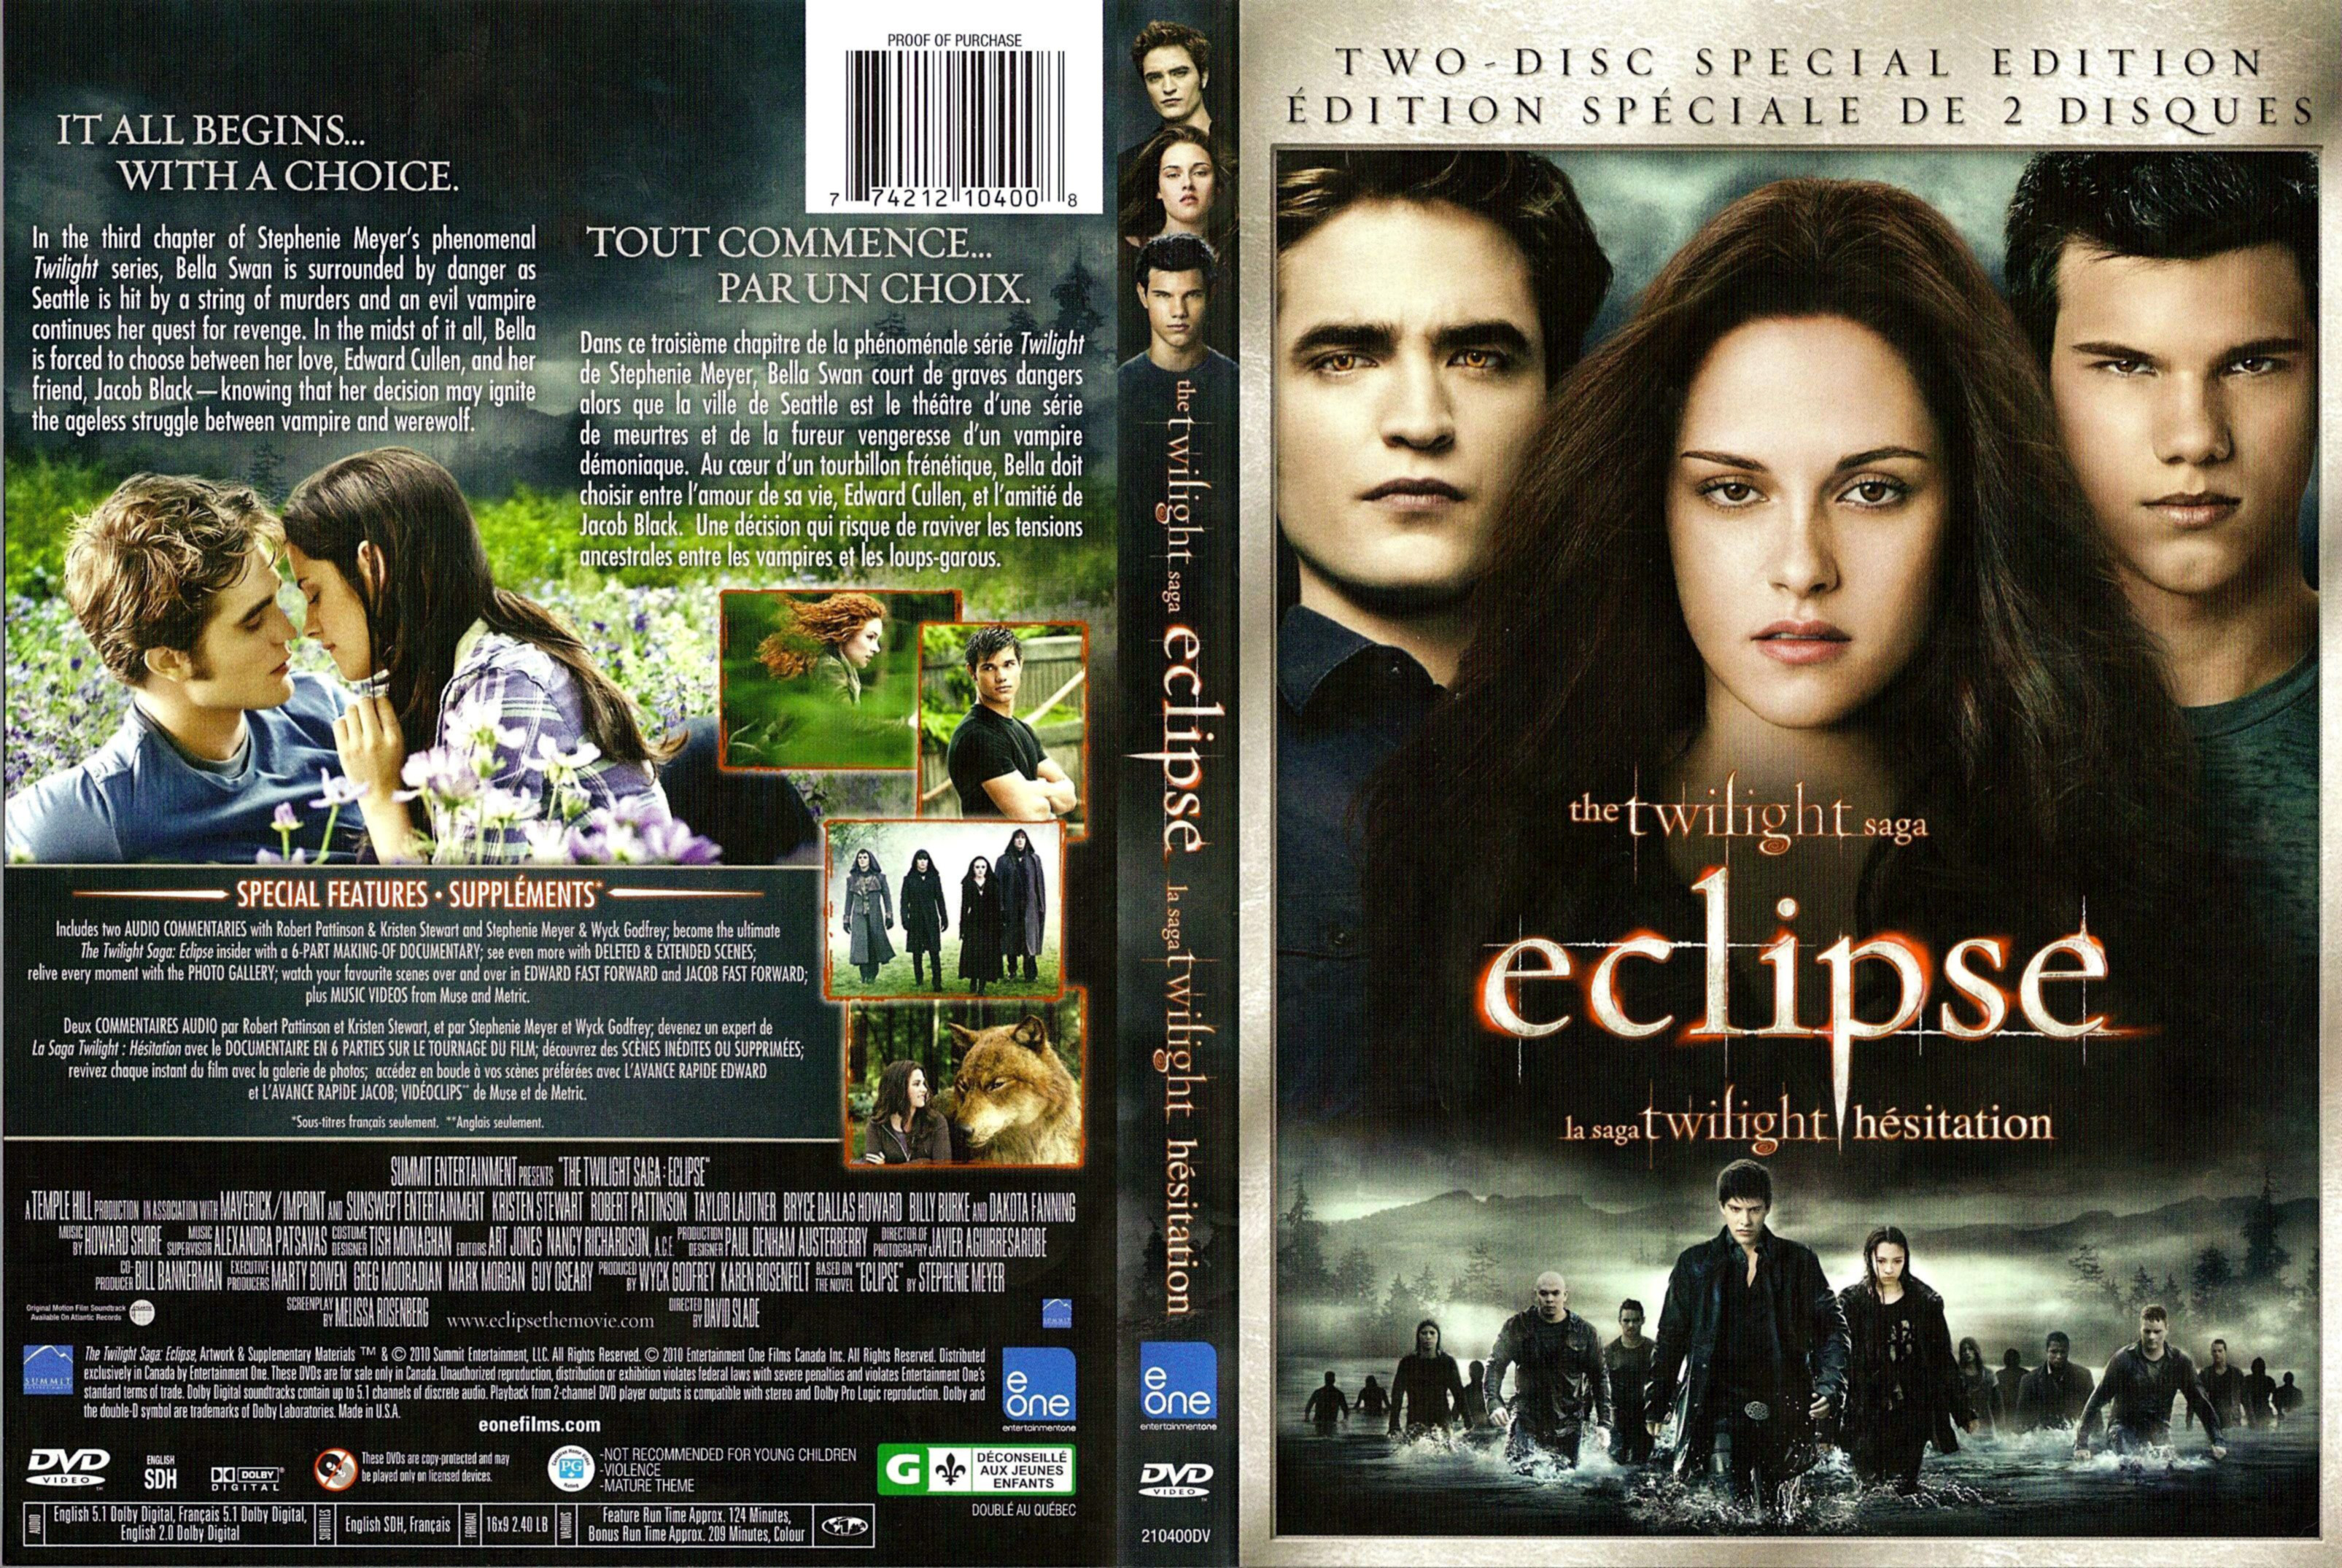 Jaquette DVD Twilight hesitation - Twilight eclipse (Canadienne) v2